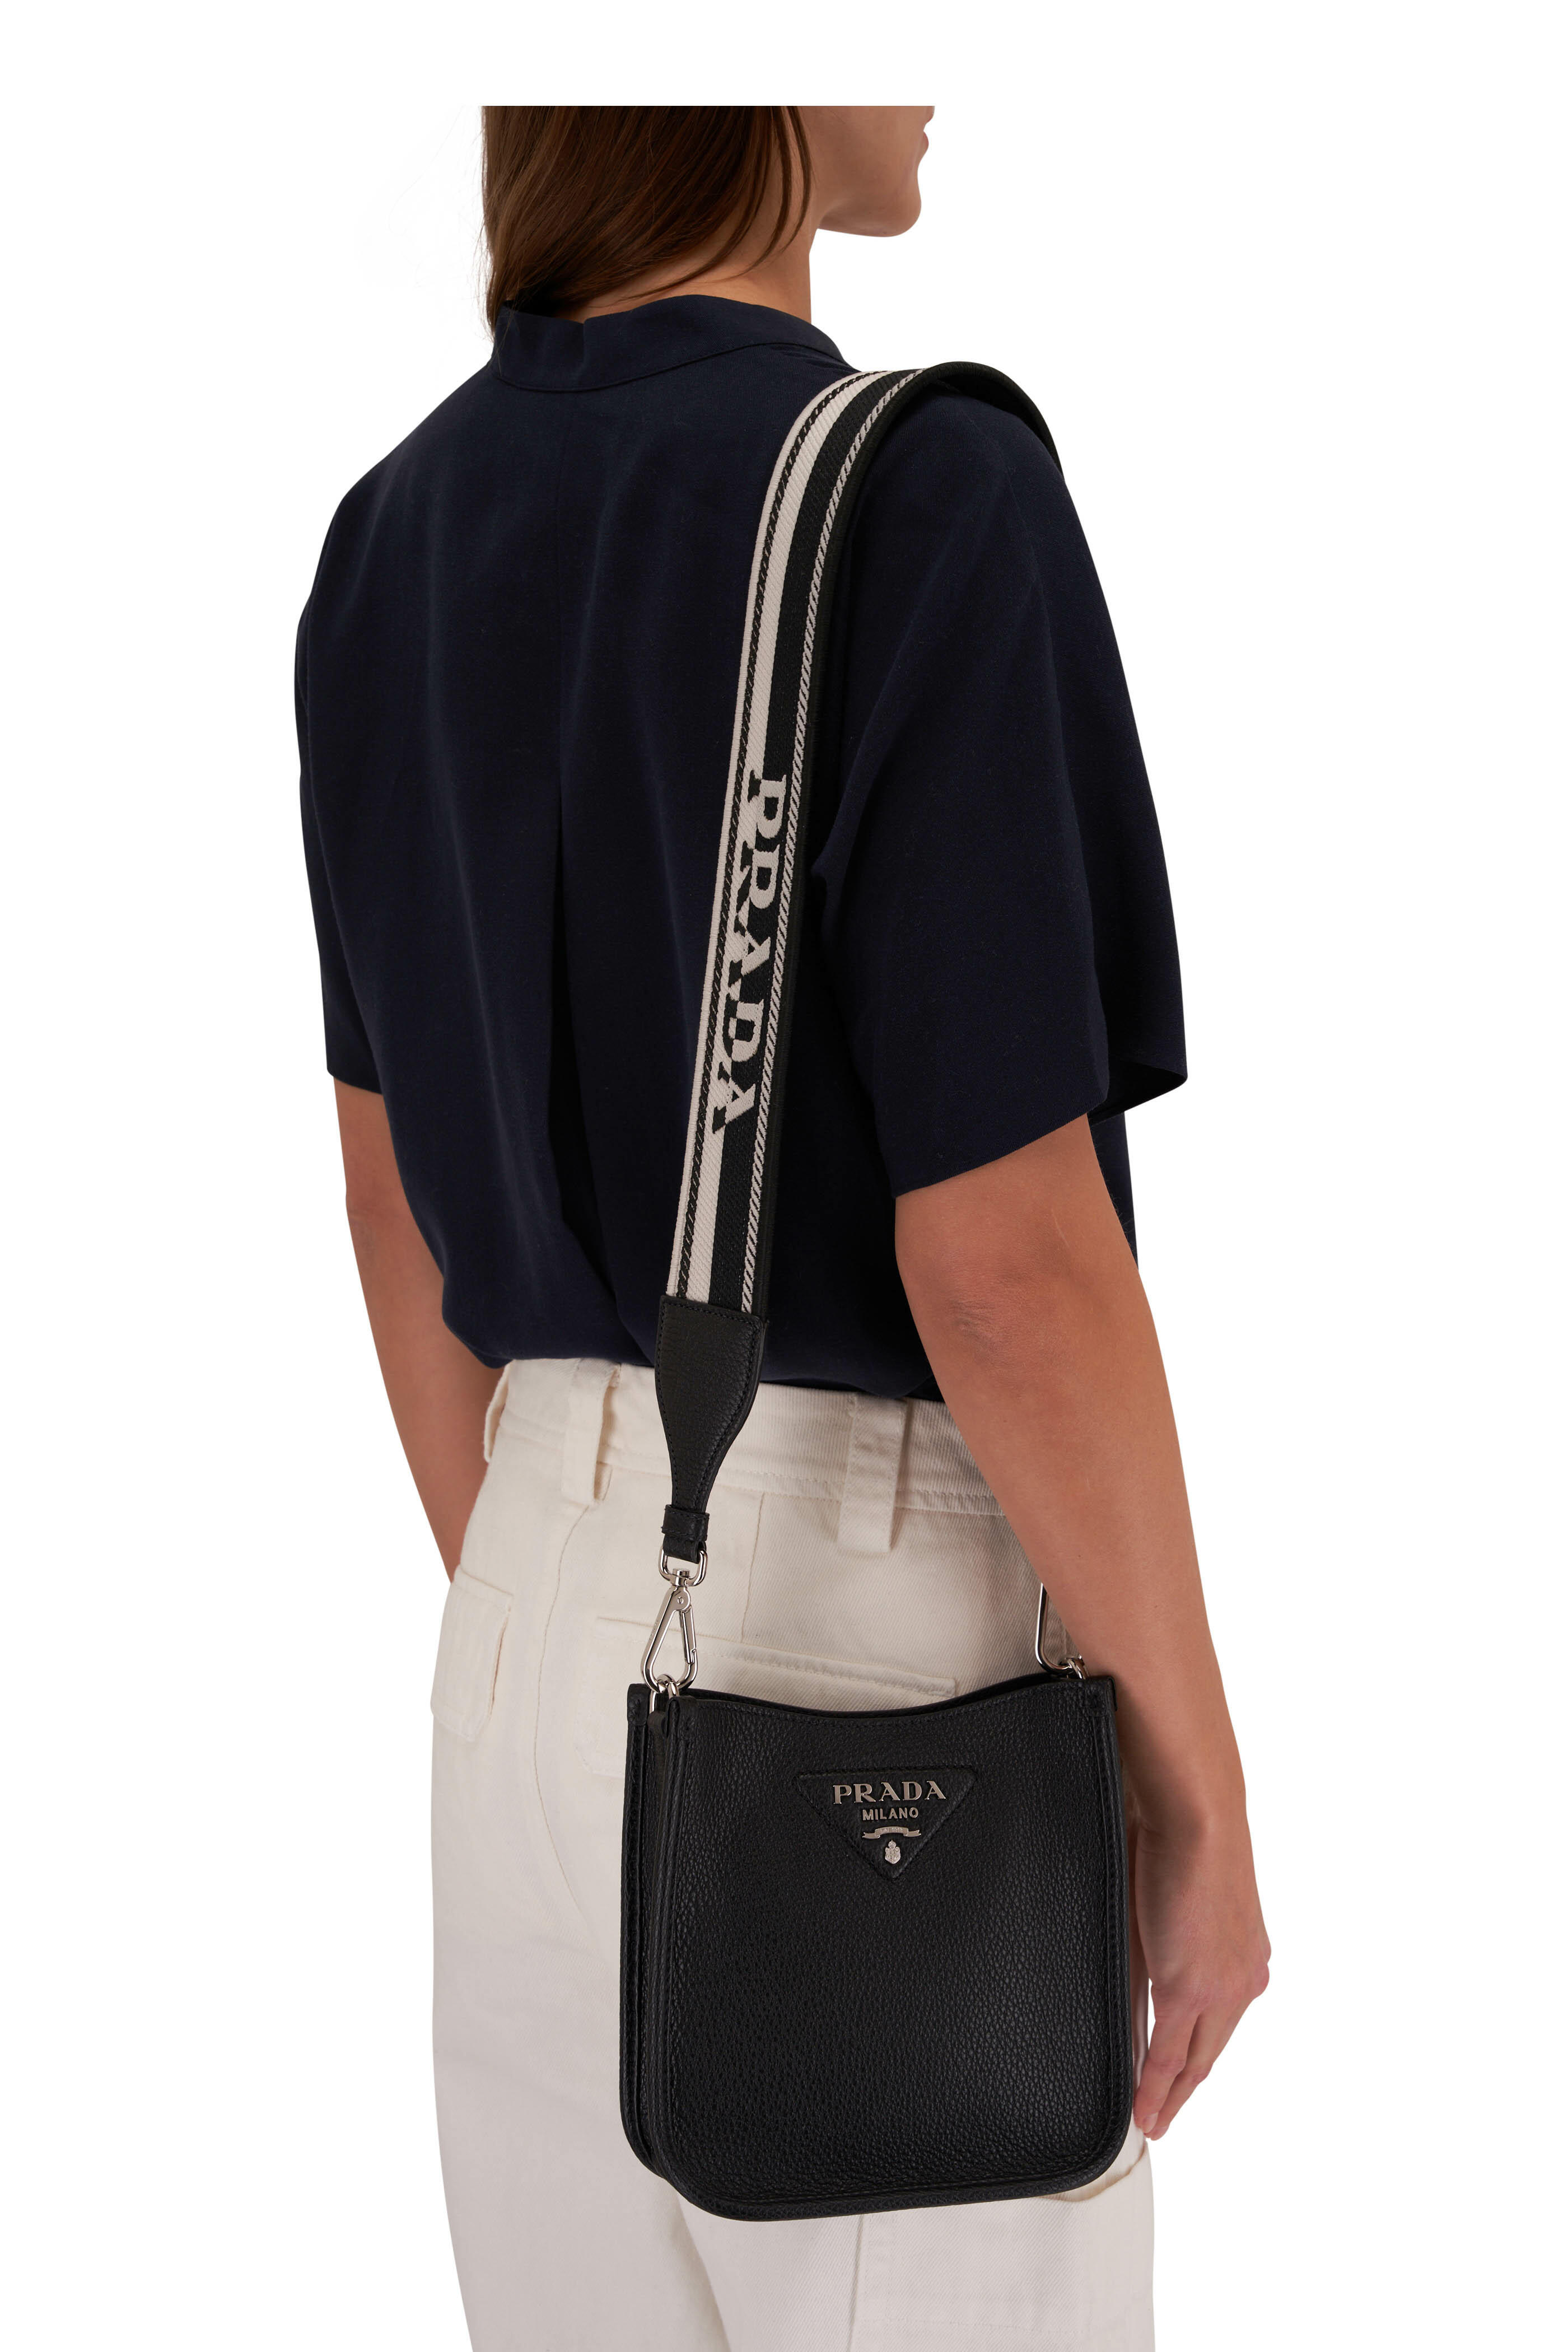 Prada - Mini Black Leather Shoulder Bag | Mitchell Stores